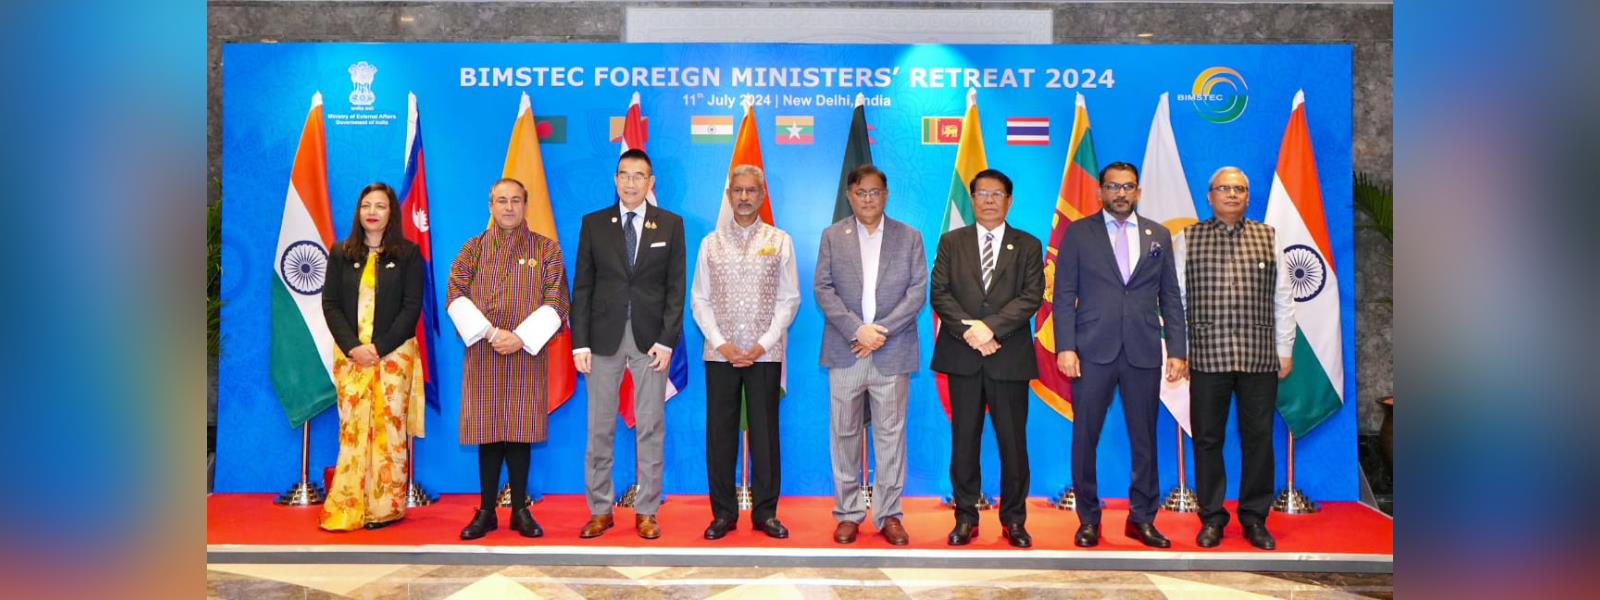 External Affairs Minister Dr. S. Jaishankar hosts the 2nd BIMSTEC Foreign Ministers' Retreat